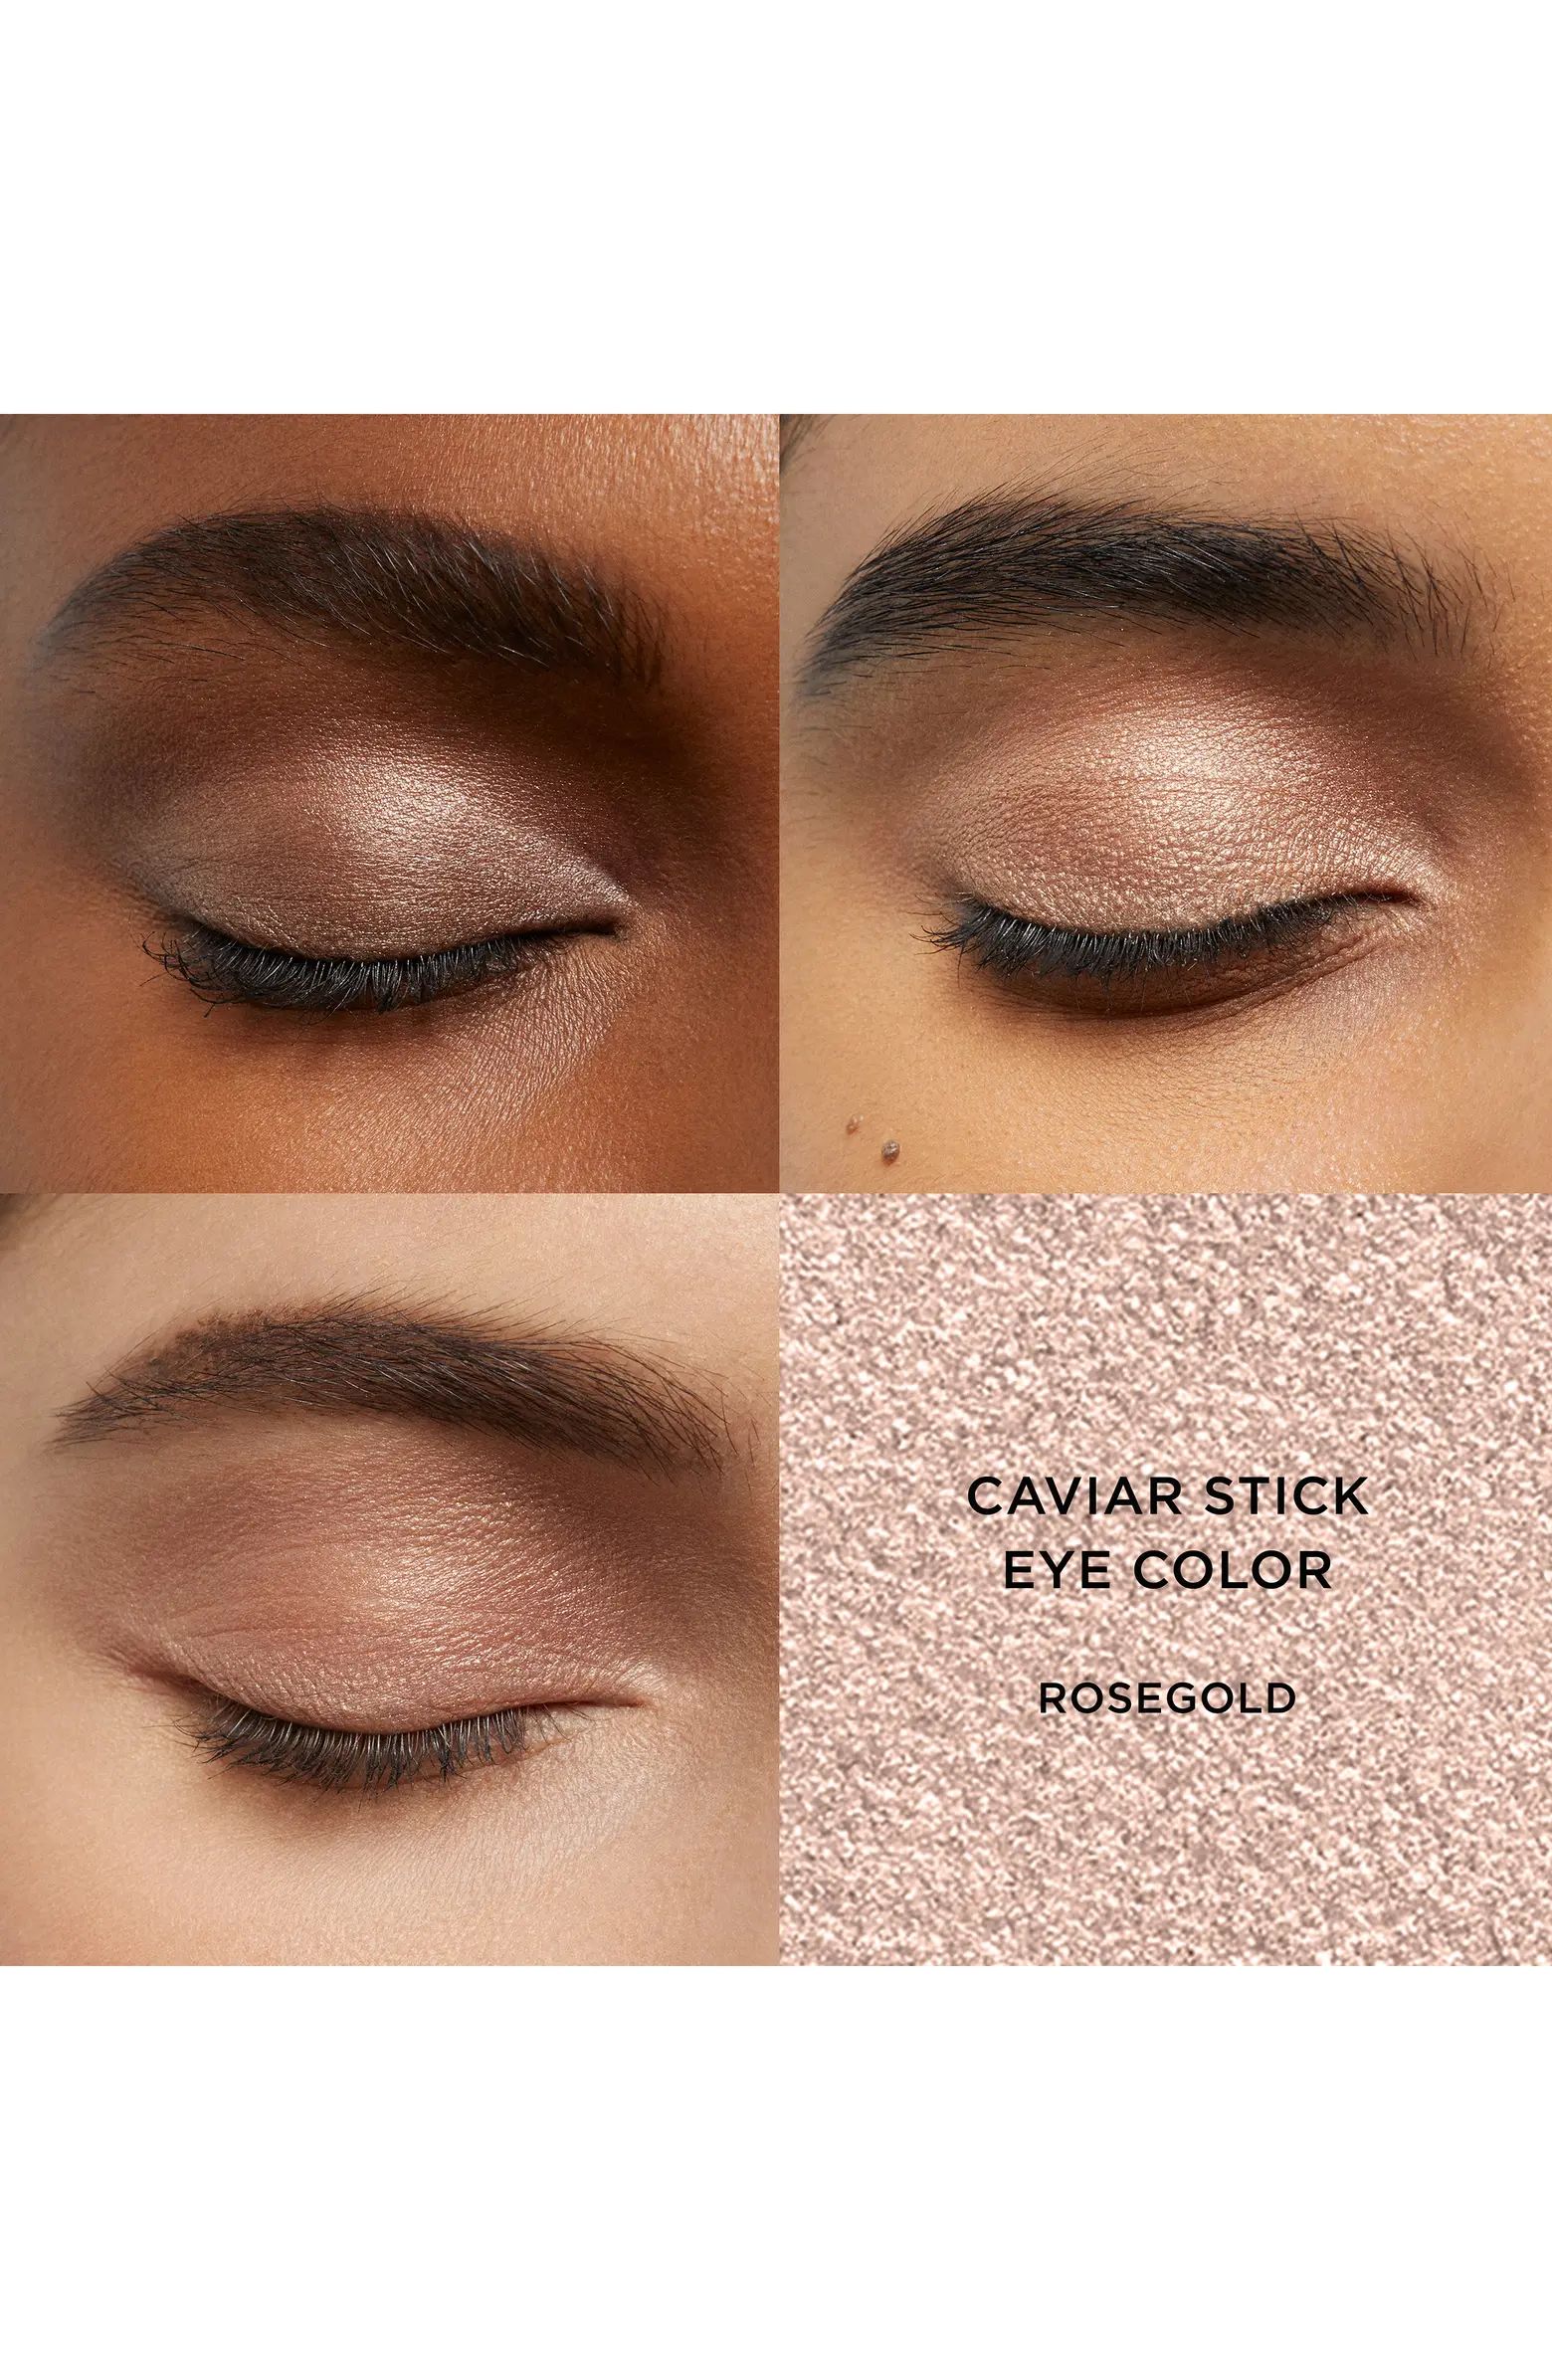 Caviar Stick Eyeshadow Trio $96 Value | Nordstrom